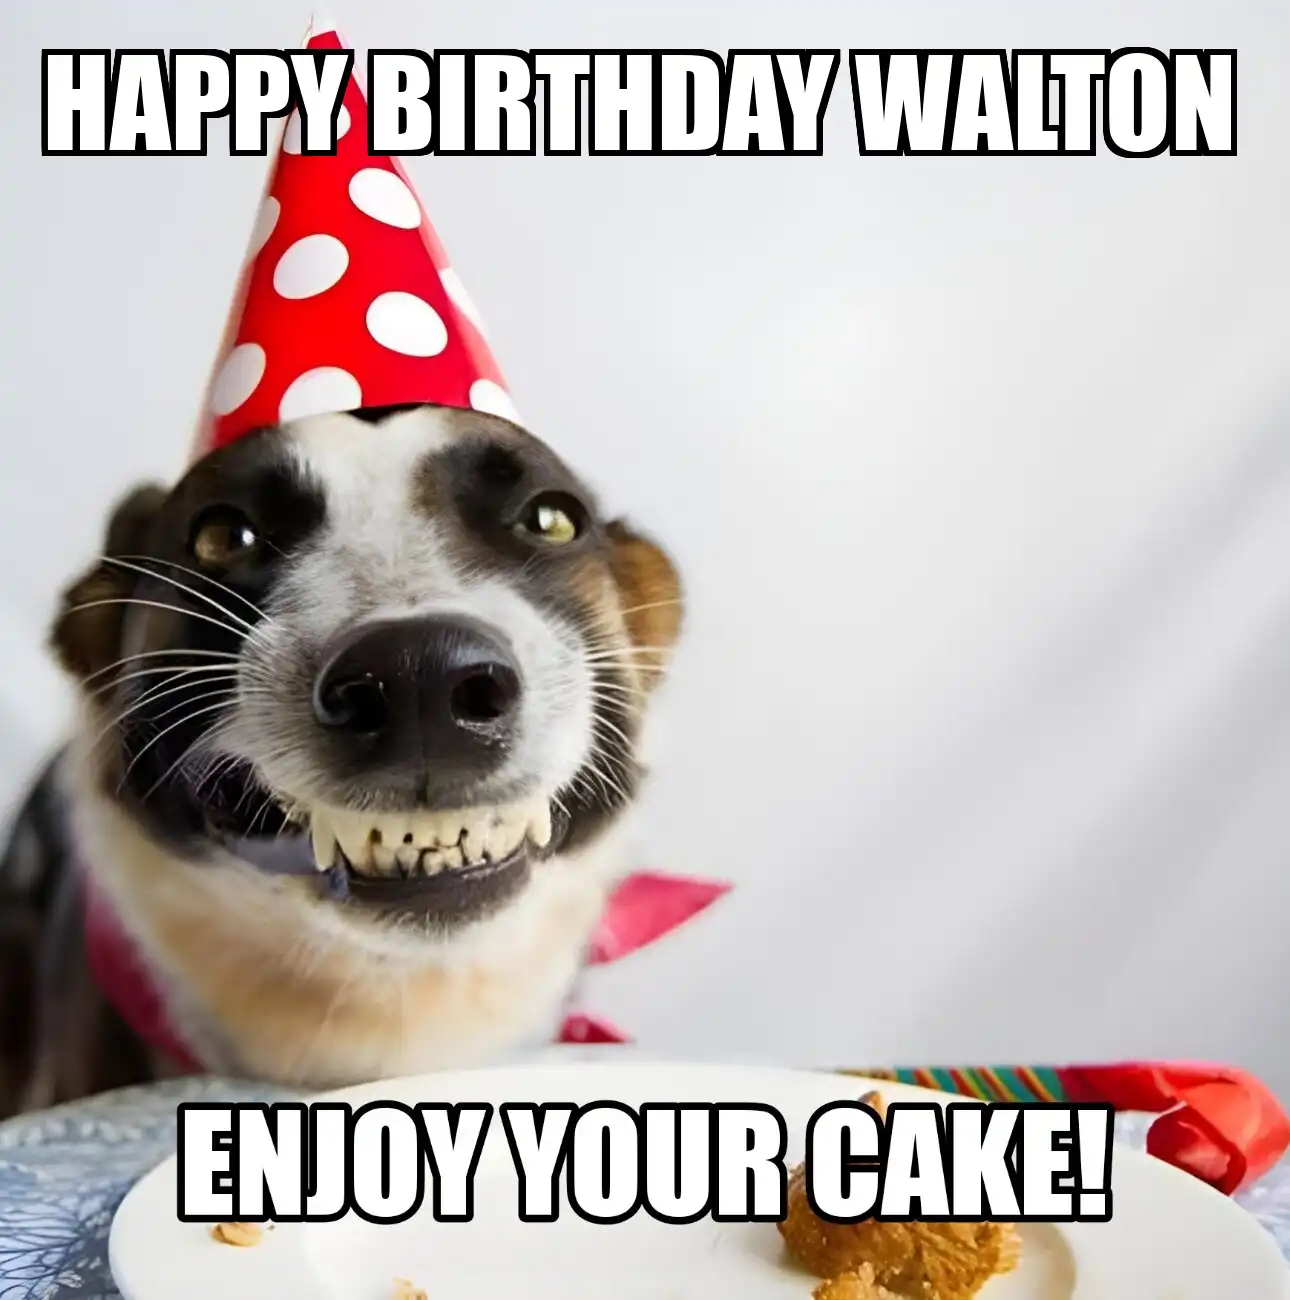 Happy Birthday Walton Enjoy Your Cake Dog Meme